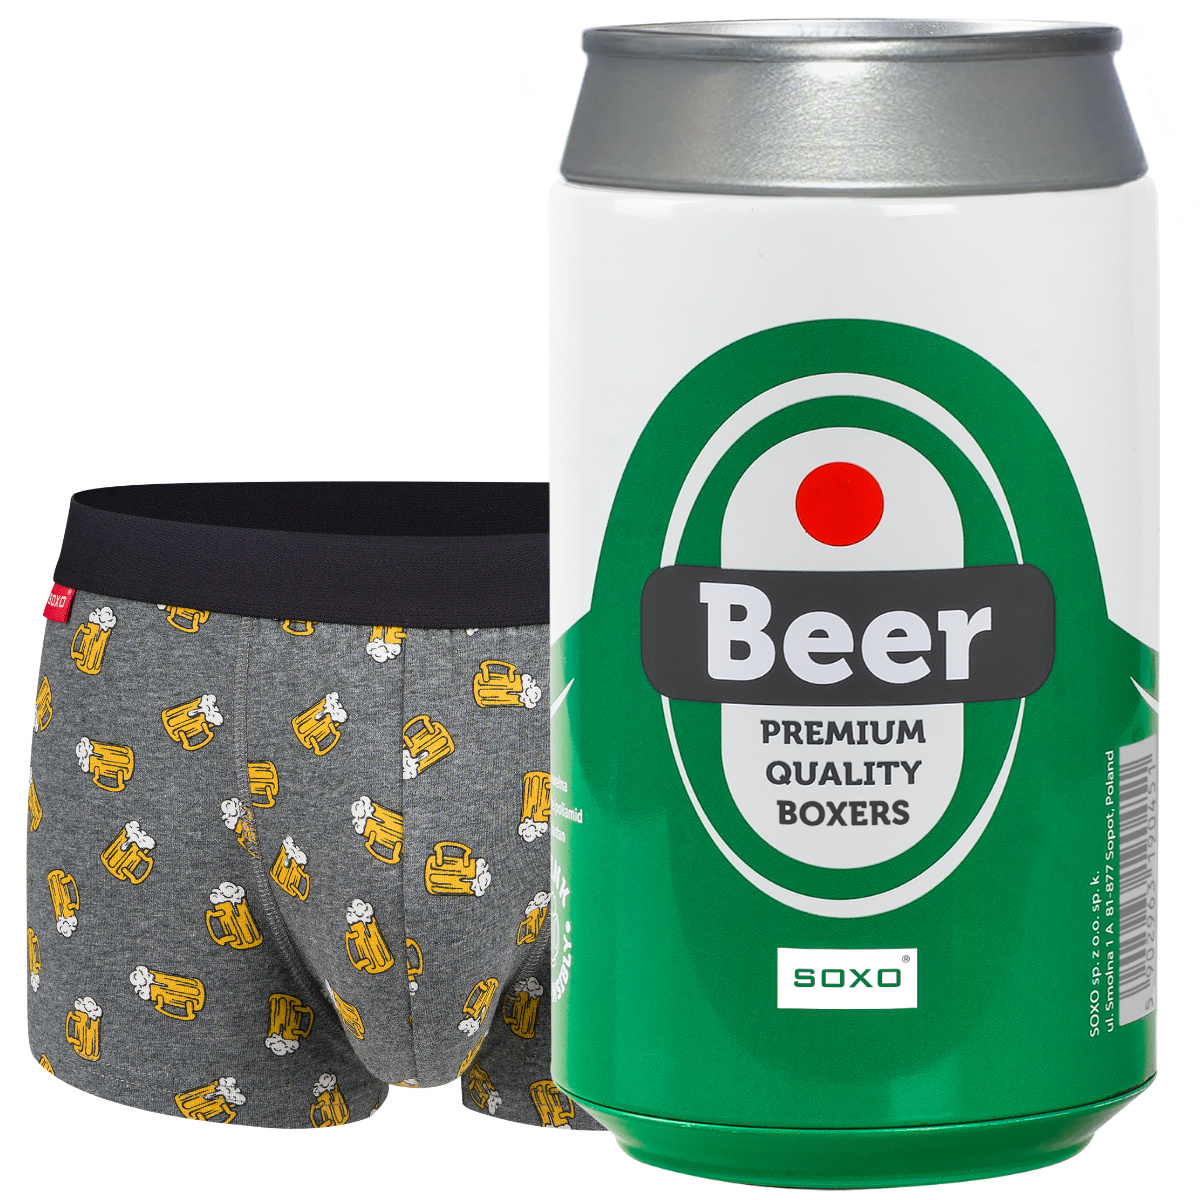 Boxer shorts beer